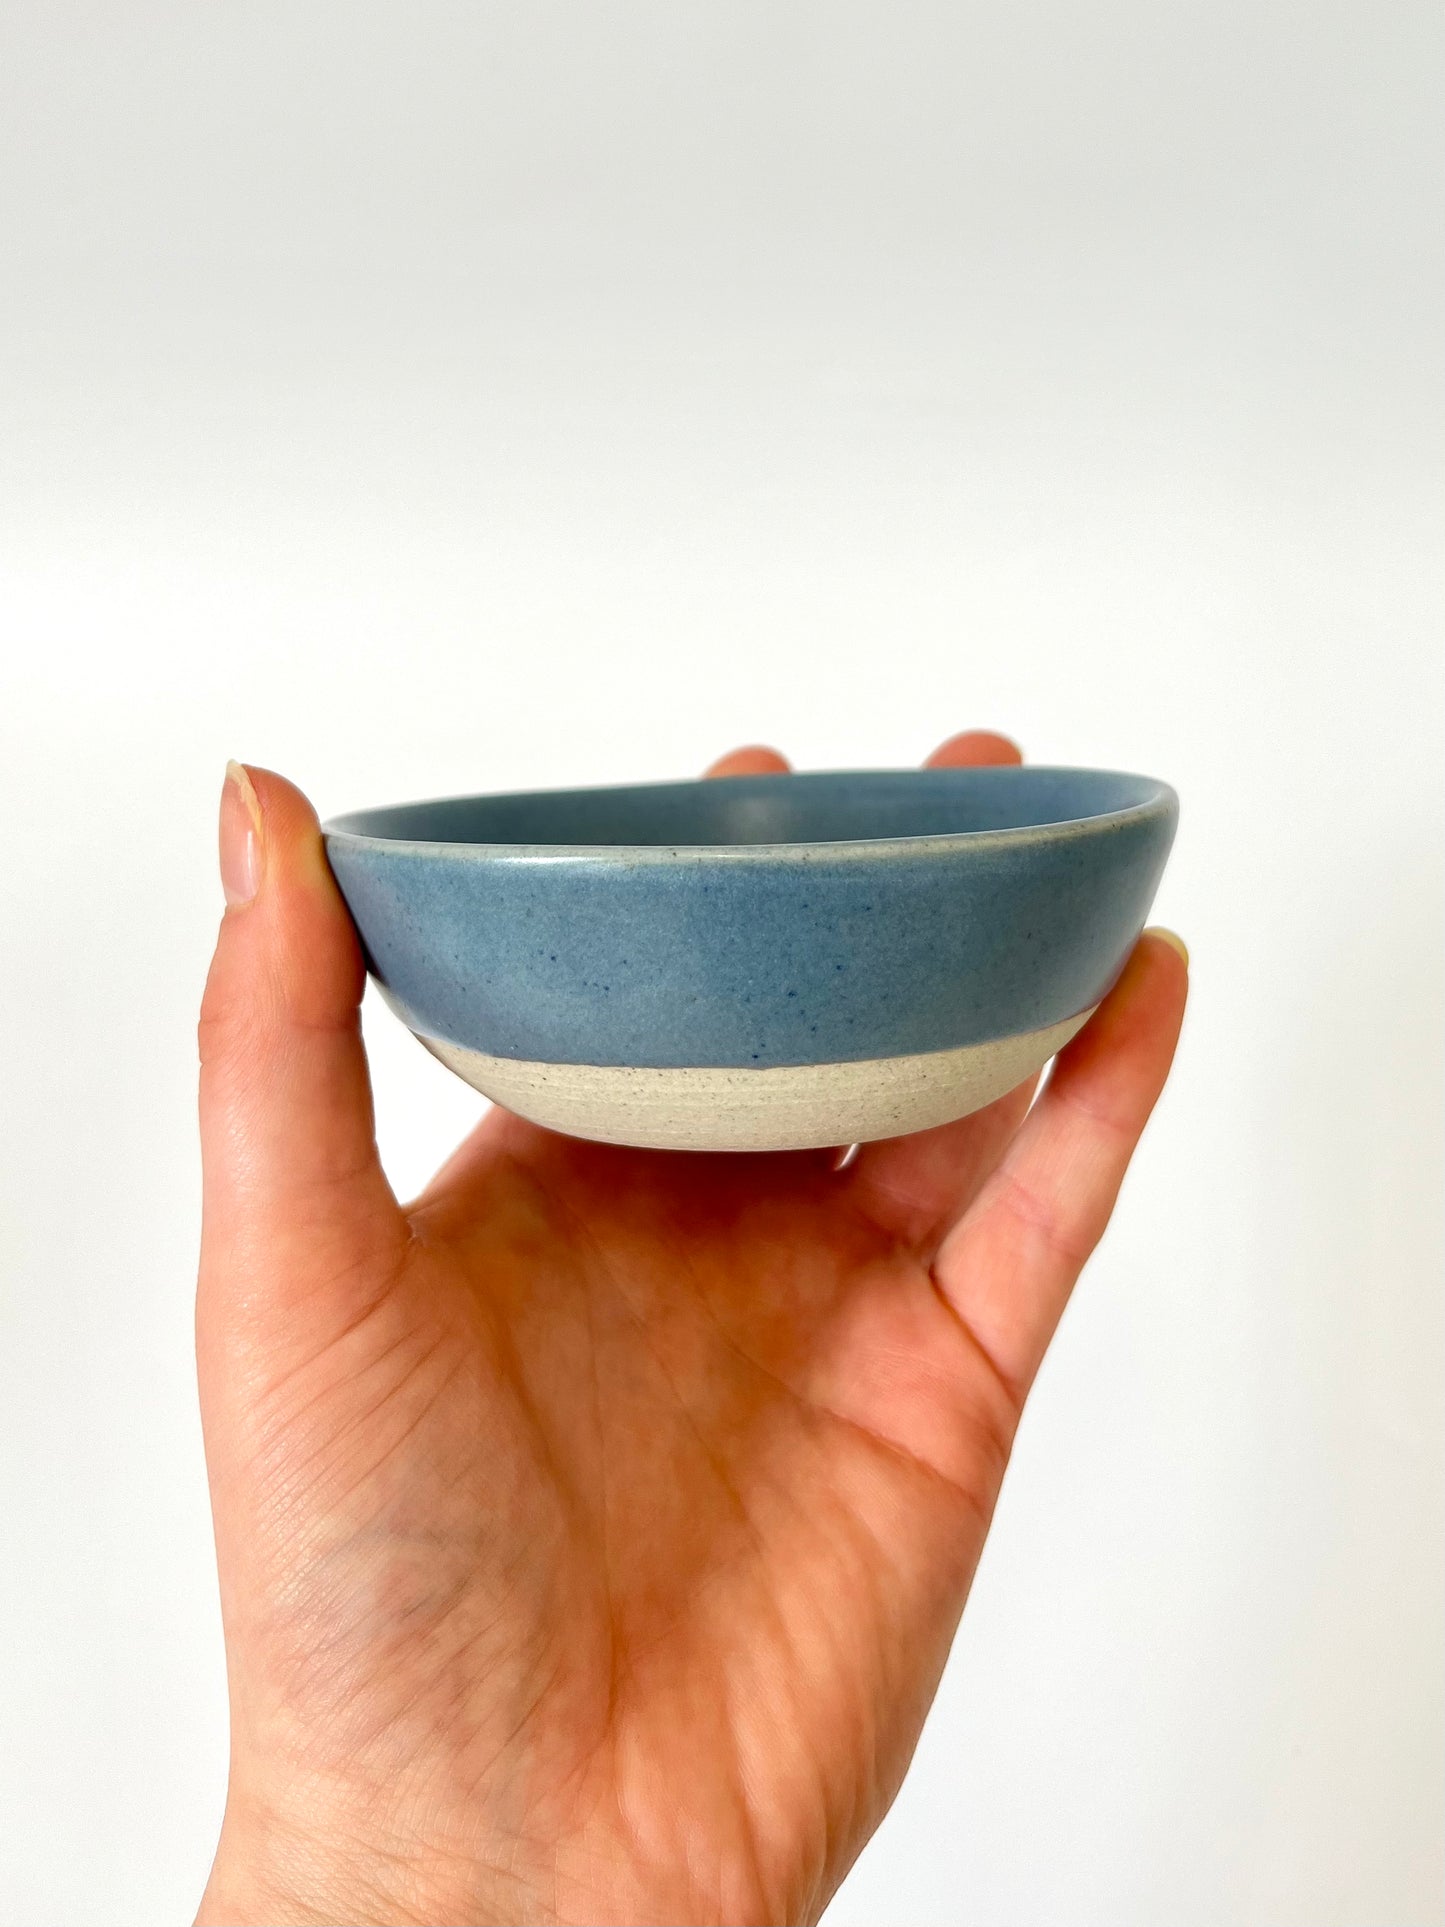 Handmade Ceramic Snack Bowl - Blue